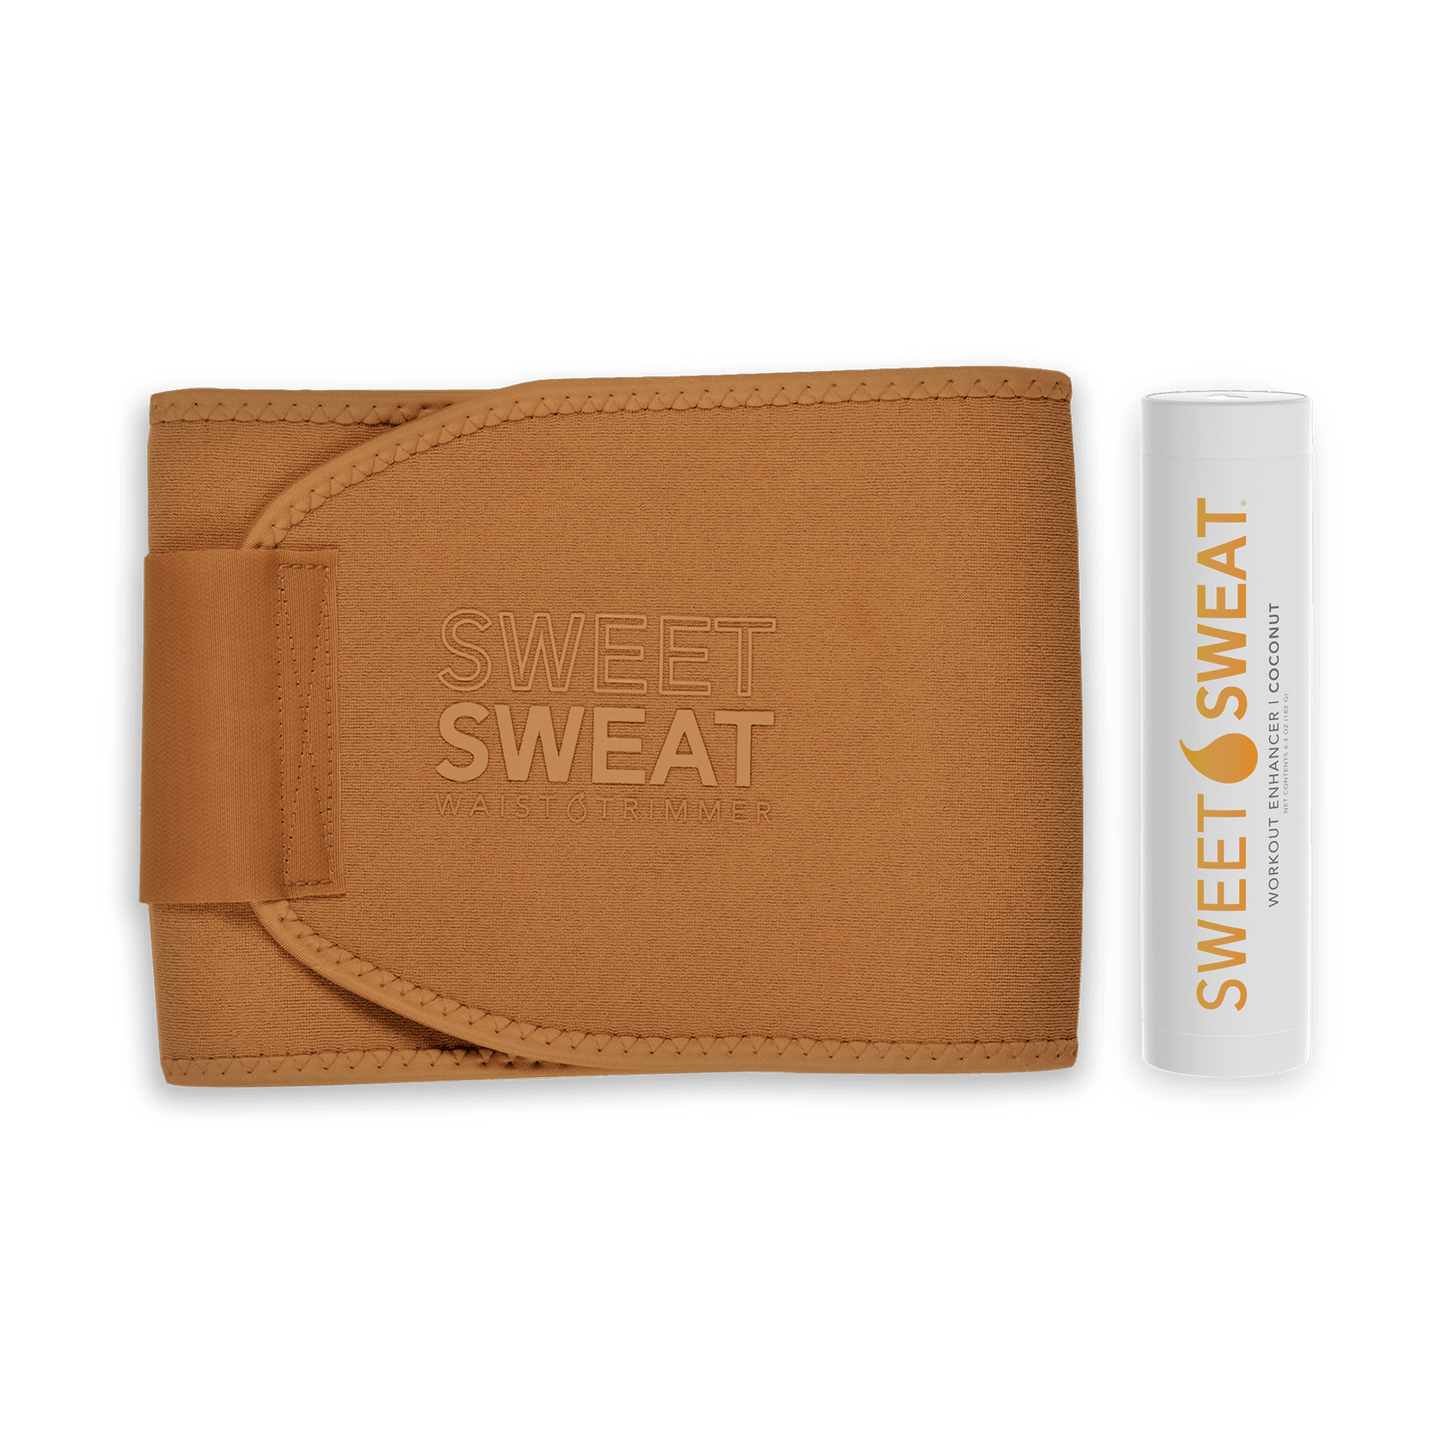 Sweet Sweat® Toned Bundle with Trimmer & Sweet Sweat® Stick lip balm set.